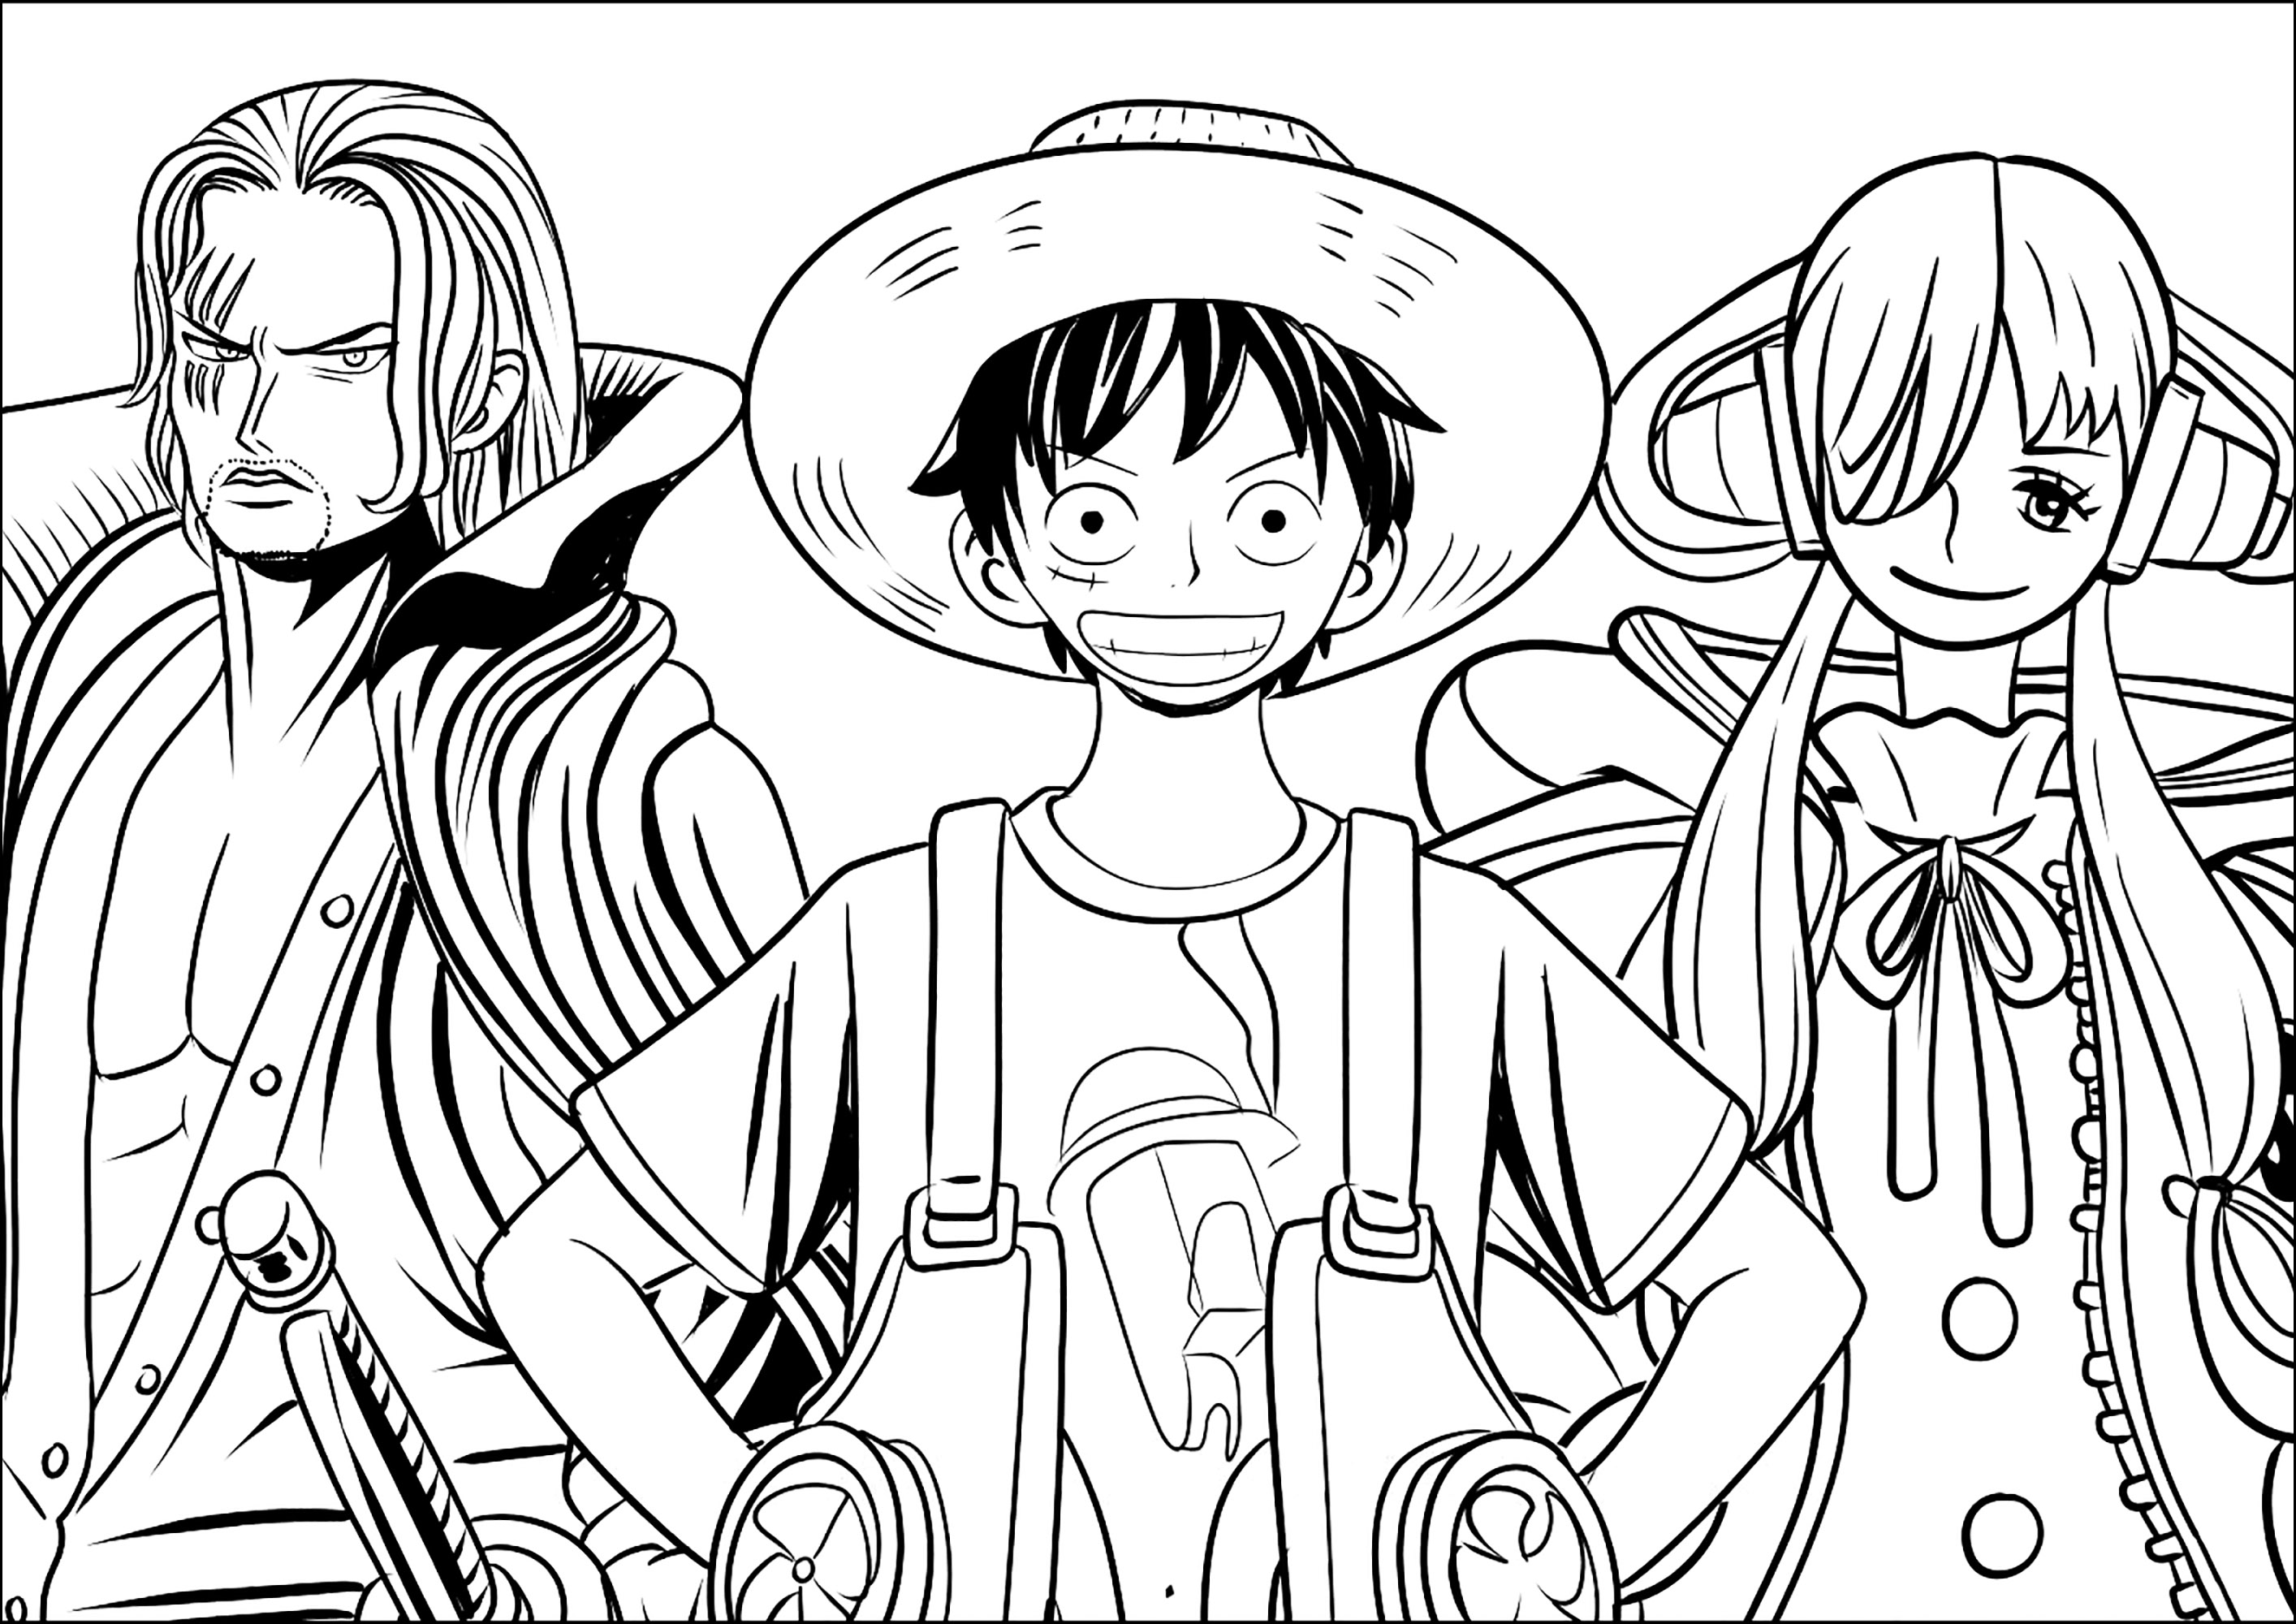 One Piece's main characters. Monkey D. Luffy, Roronoa Zoro, et Nami